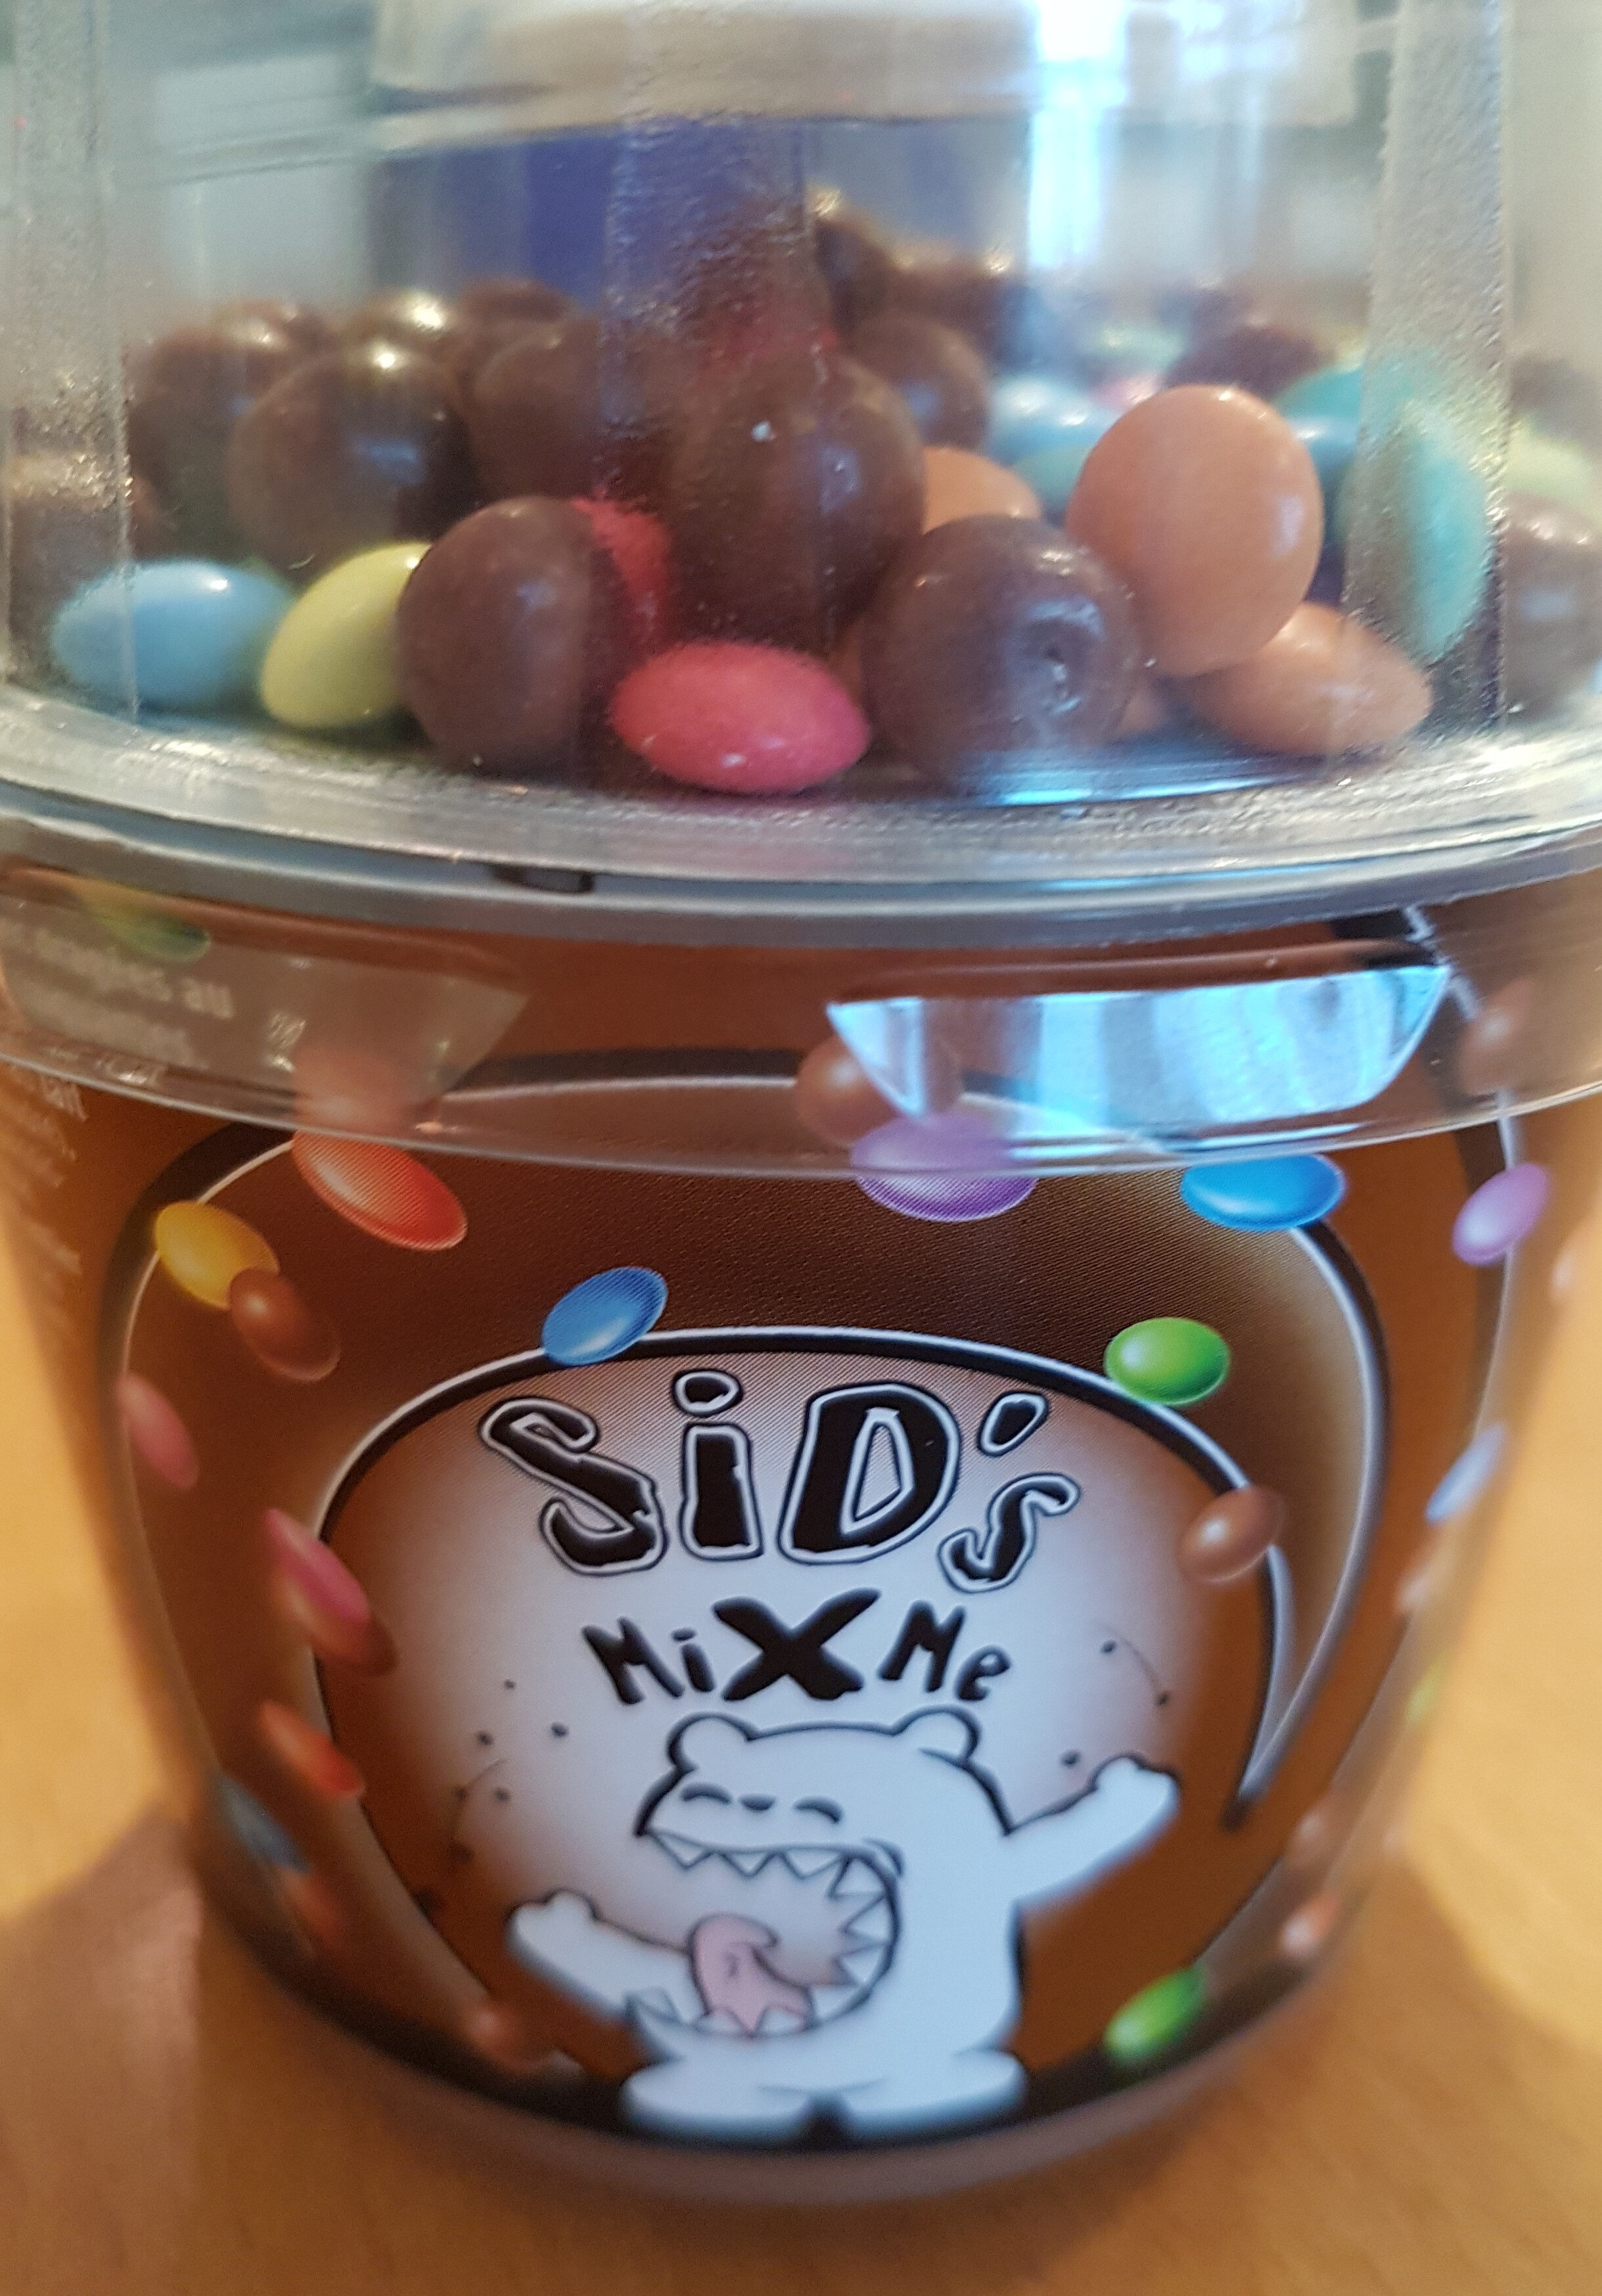 Sid's MixMe Chococream - Produit